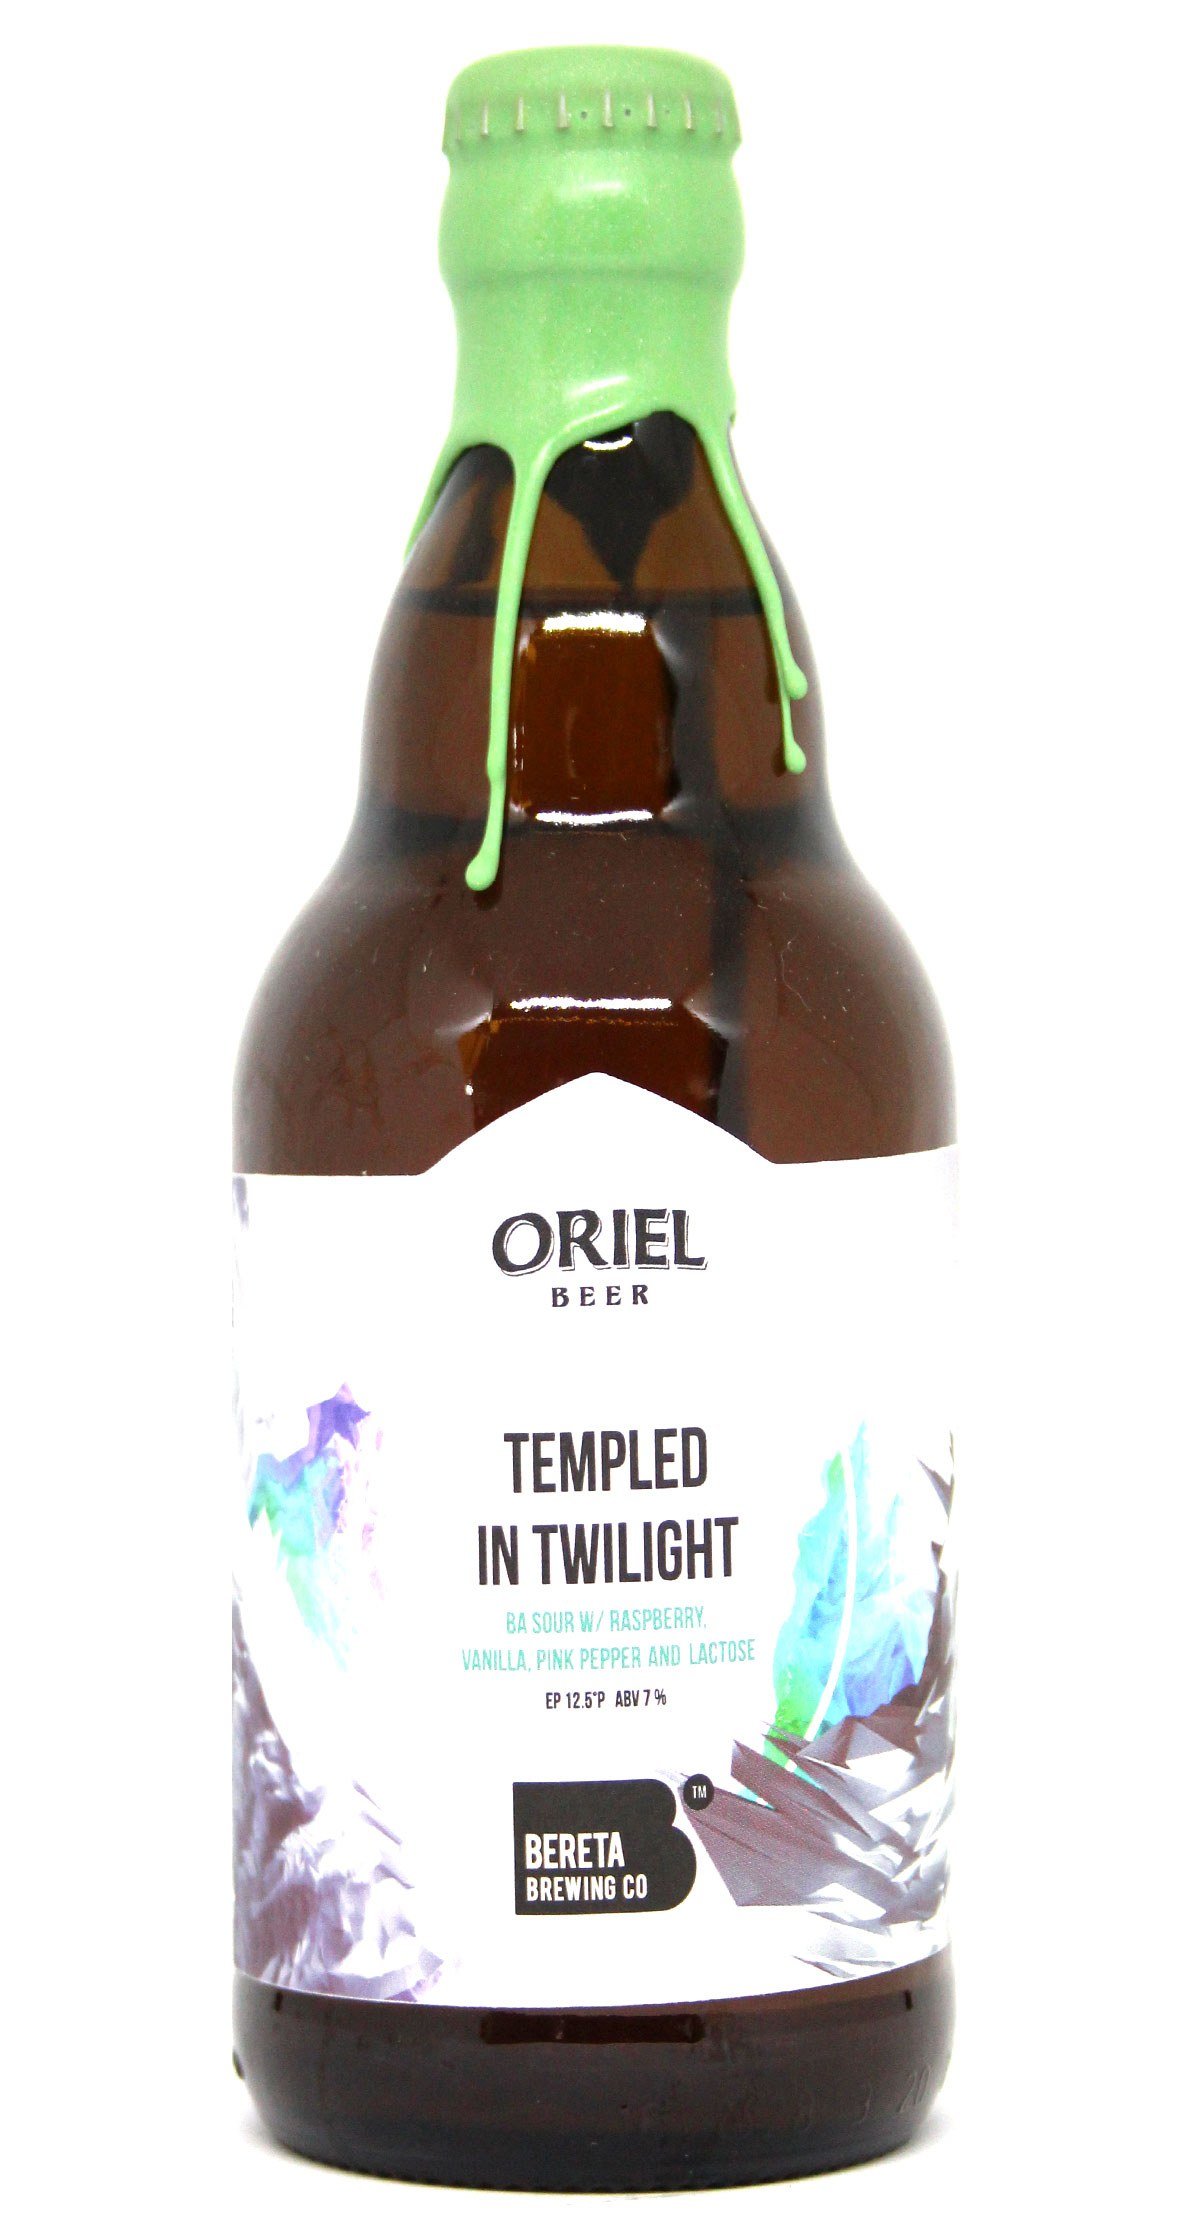 Oriel X Bereta Templed In Twilight BA (w Raspberry, Vanilla, Pink Pepper And Lactose)